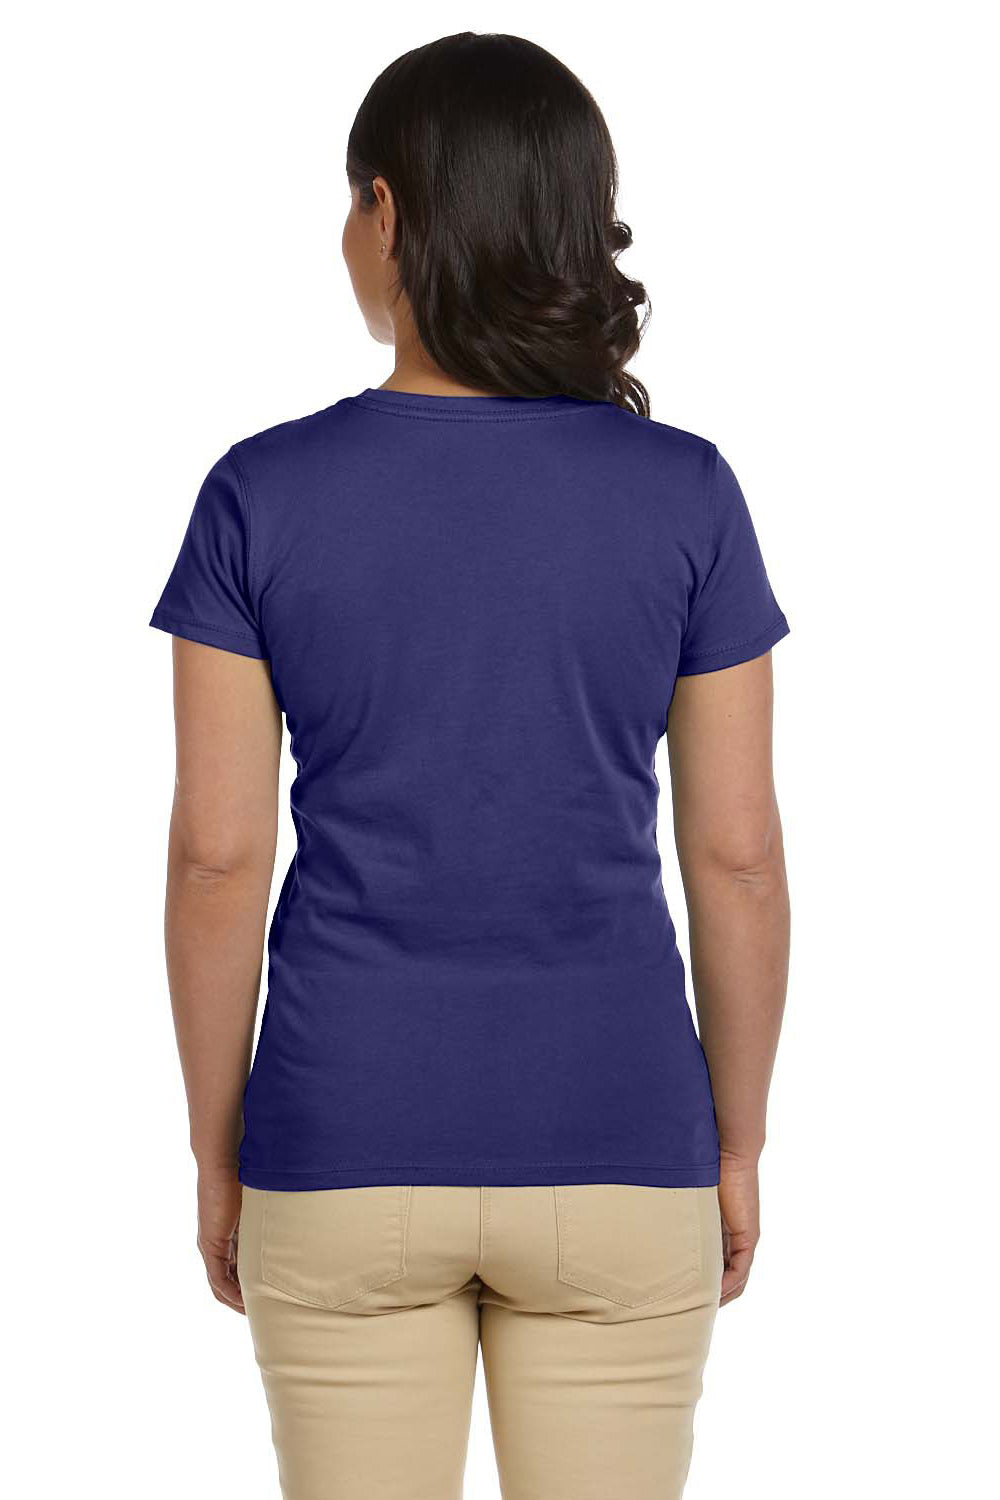 Econscious EC3000 Womens Heather Sueded Short Sleeve Crewneck T-Shirt Iris Blue Back